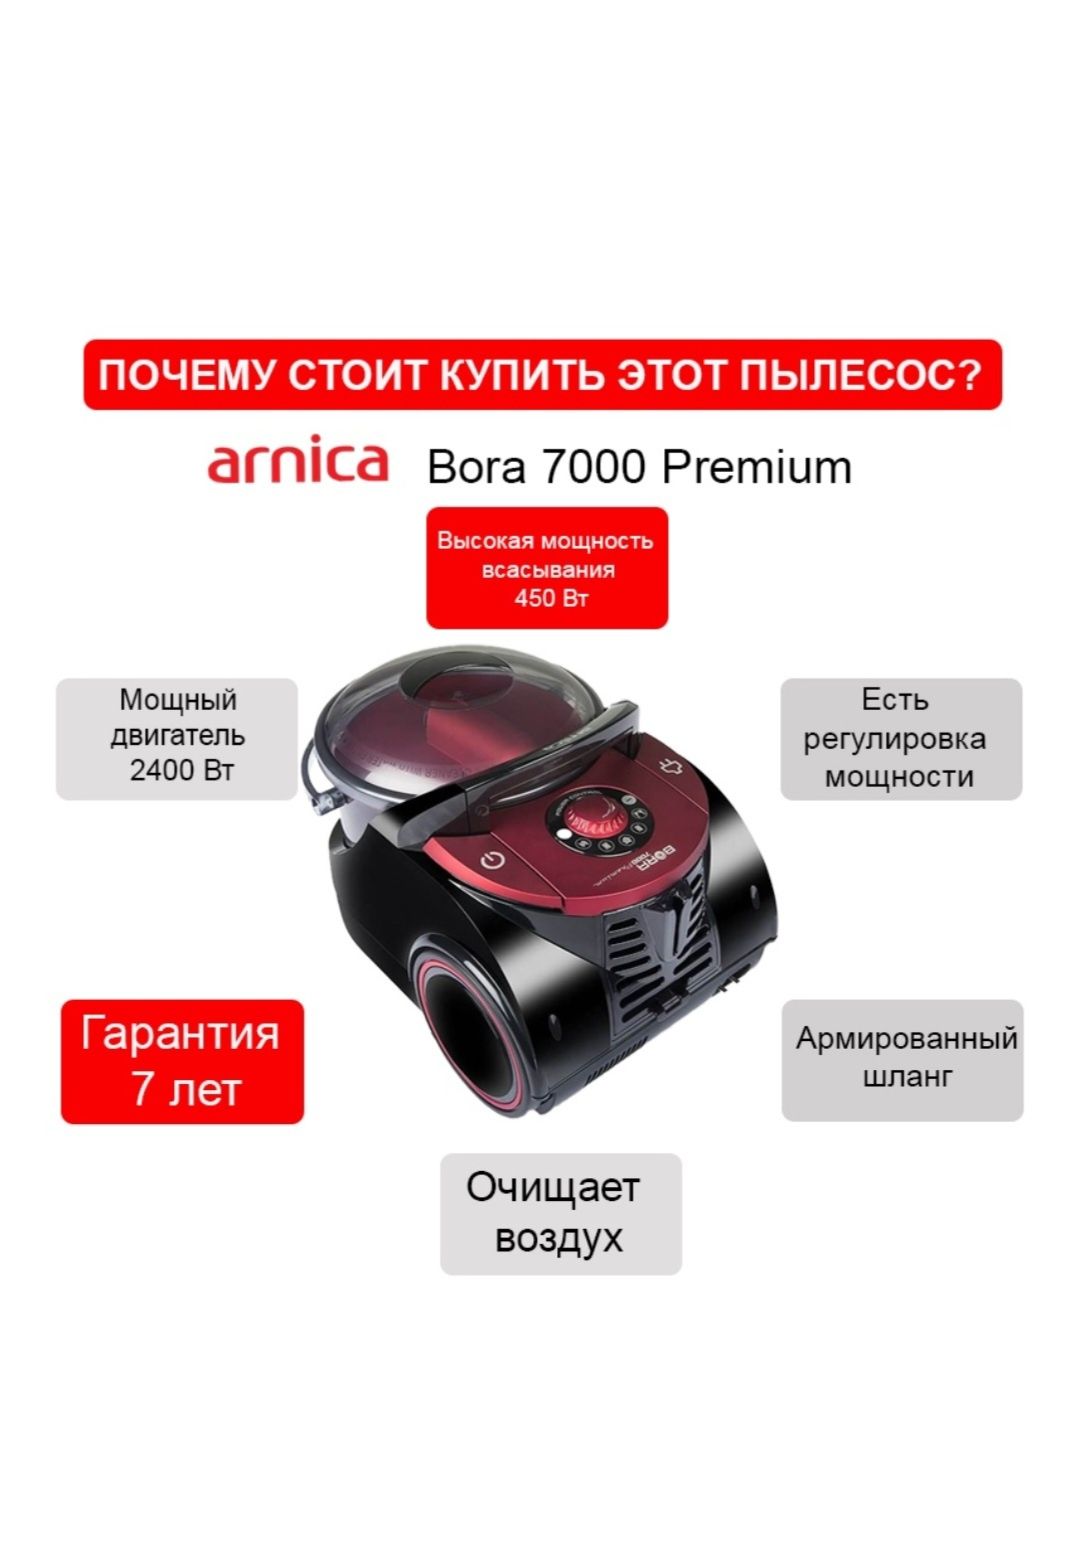 Пылесос ARNICA Bora 7000 Premium